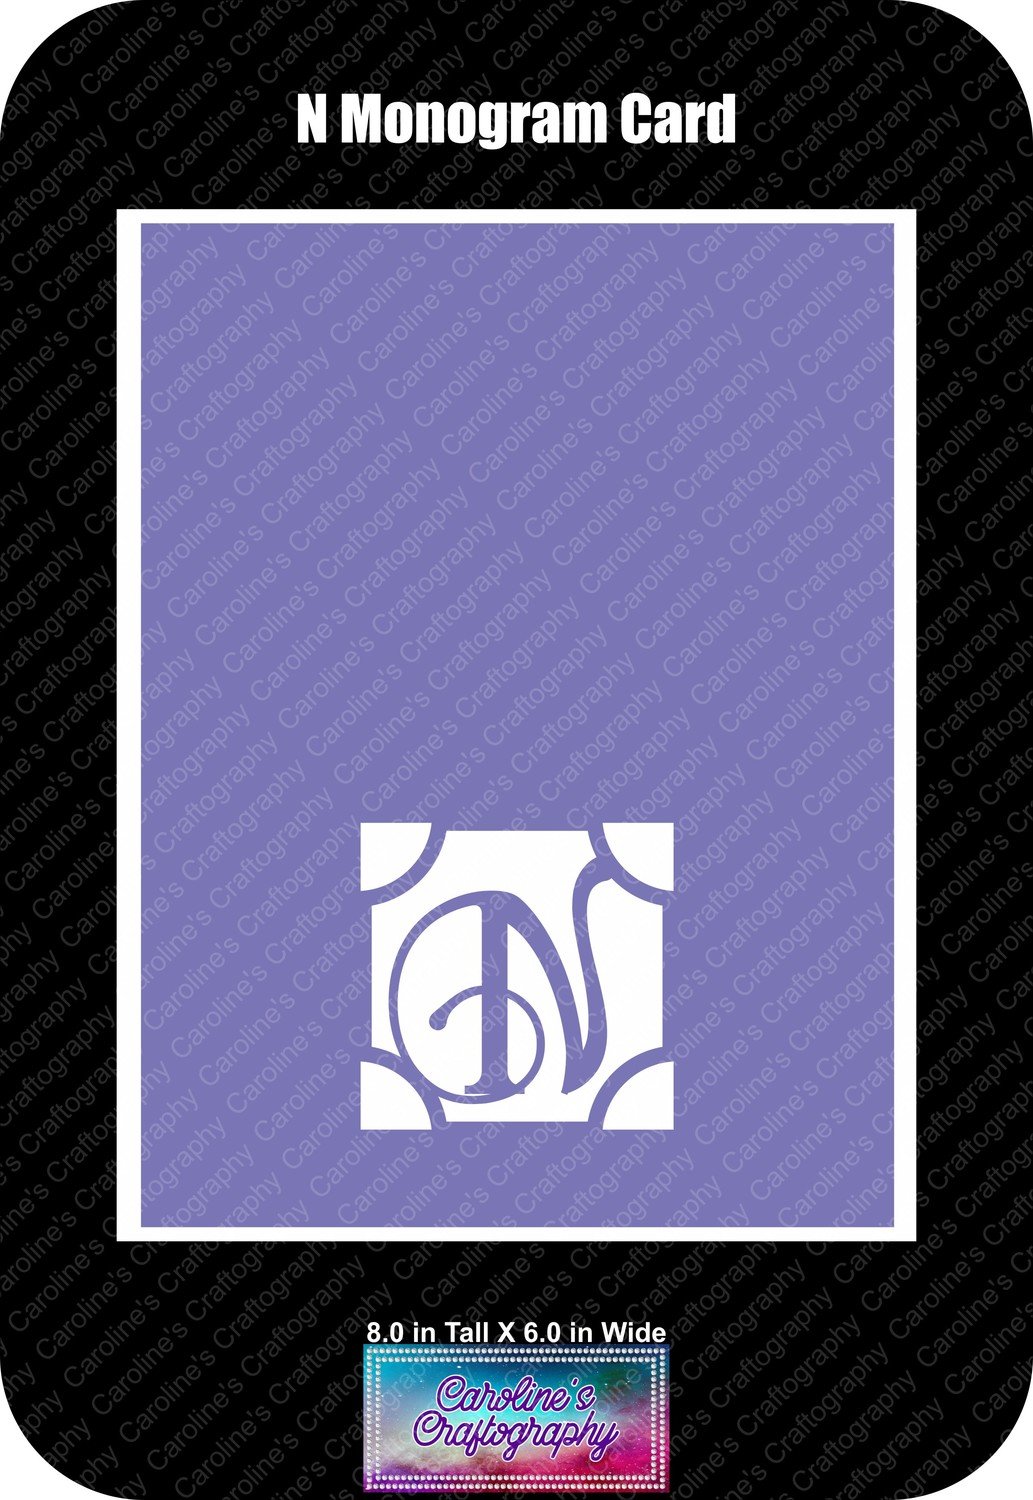 N Monogram Card Base